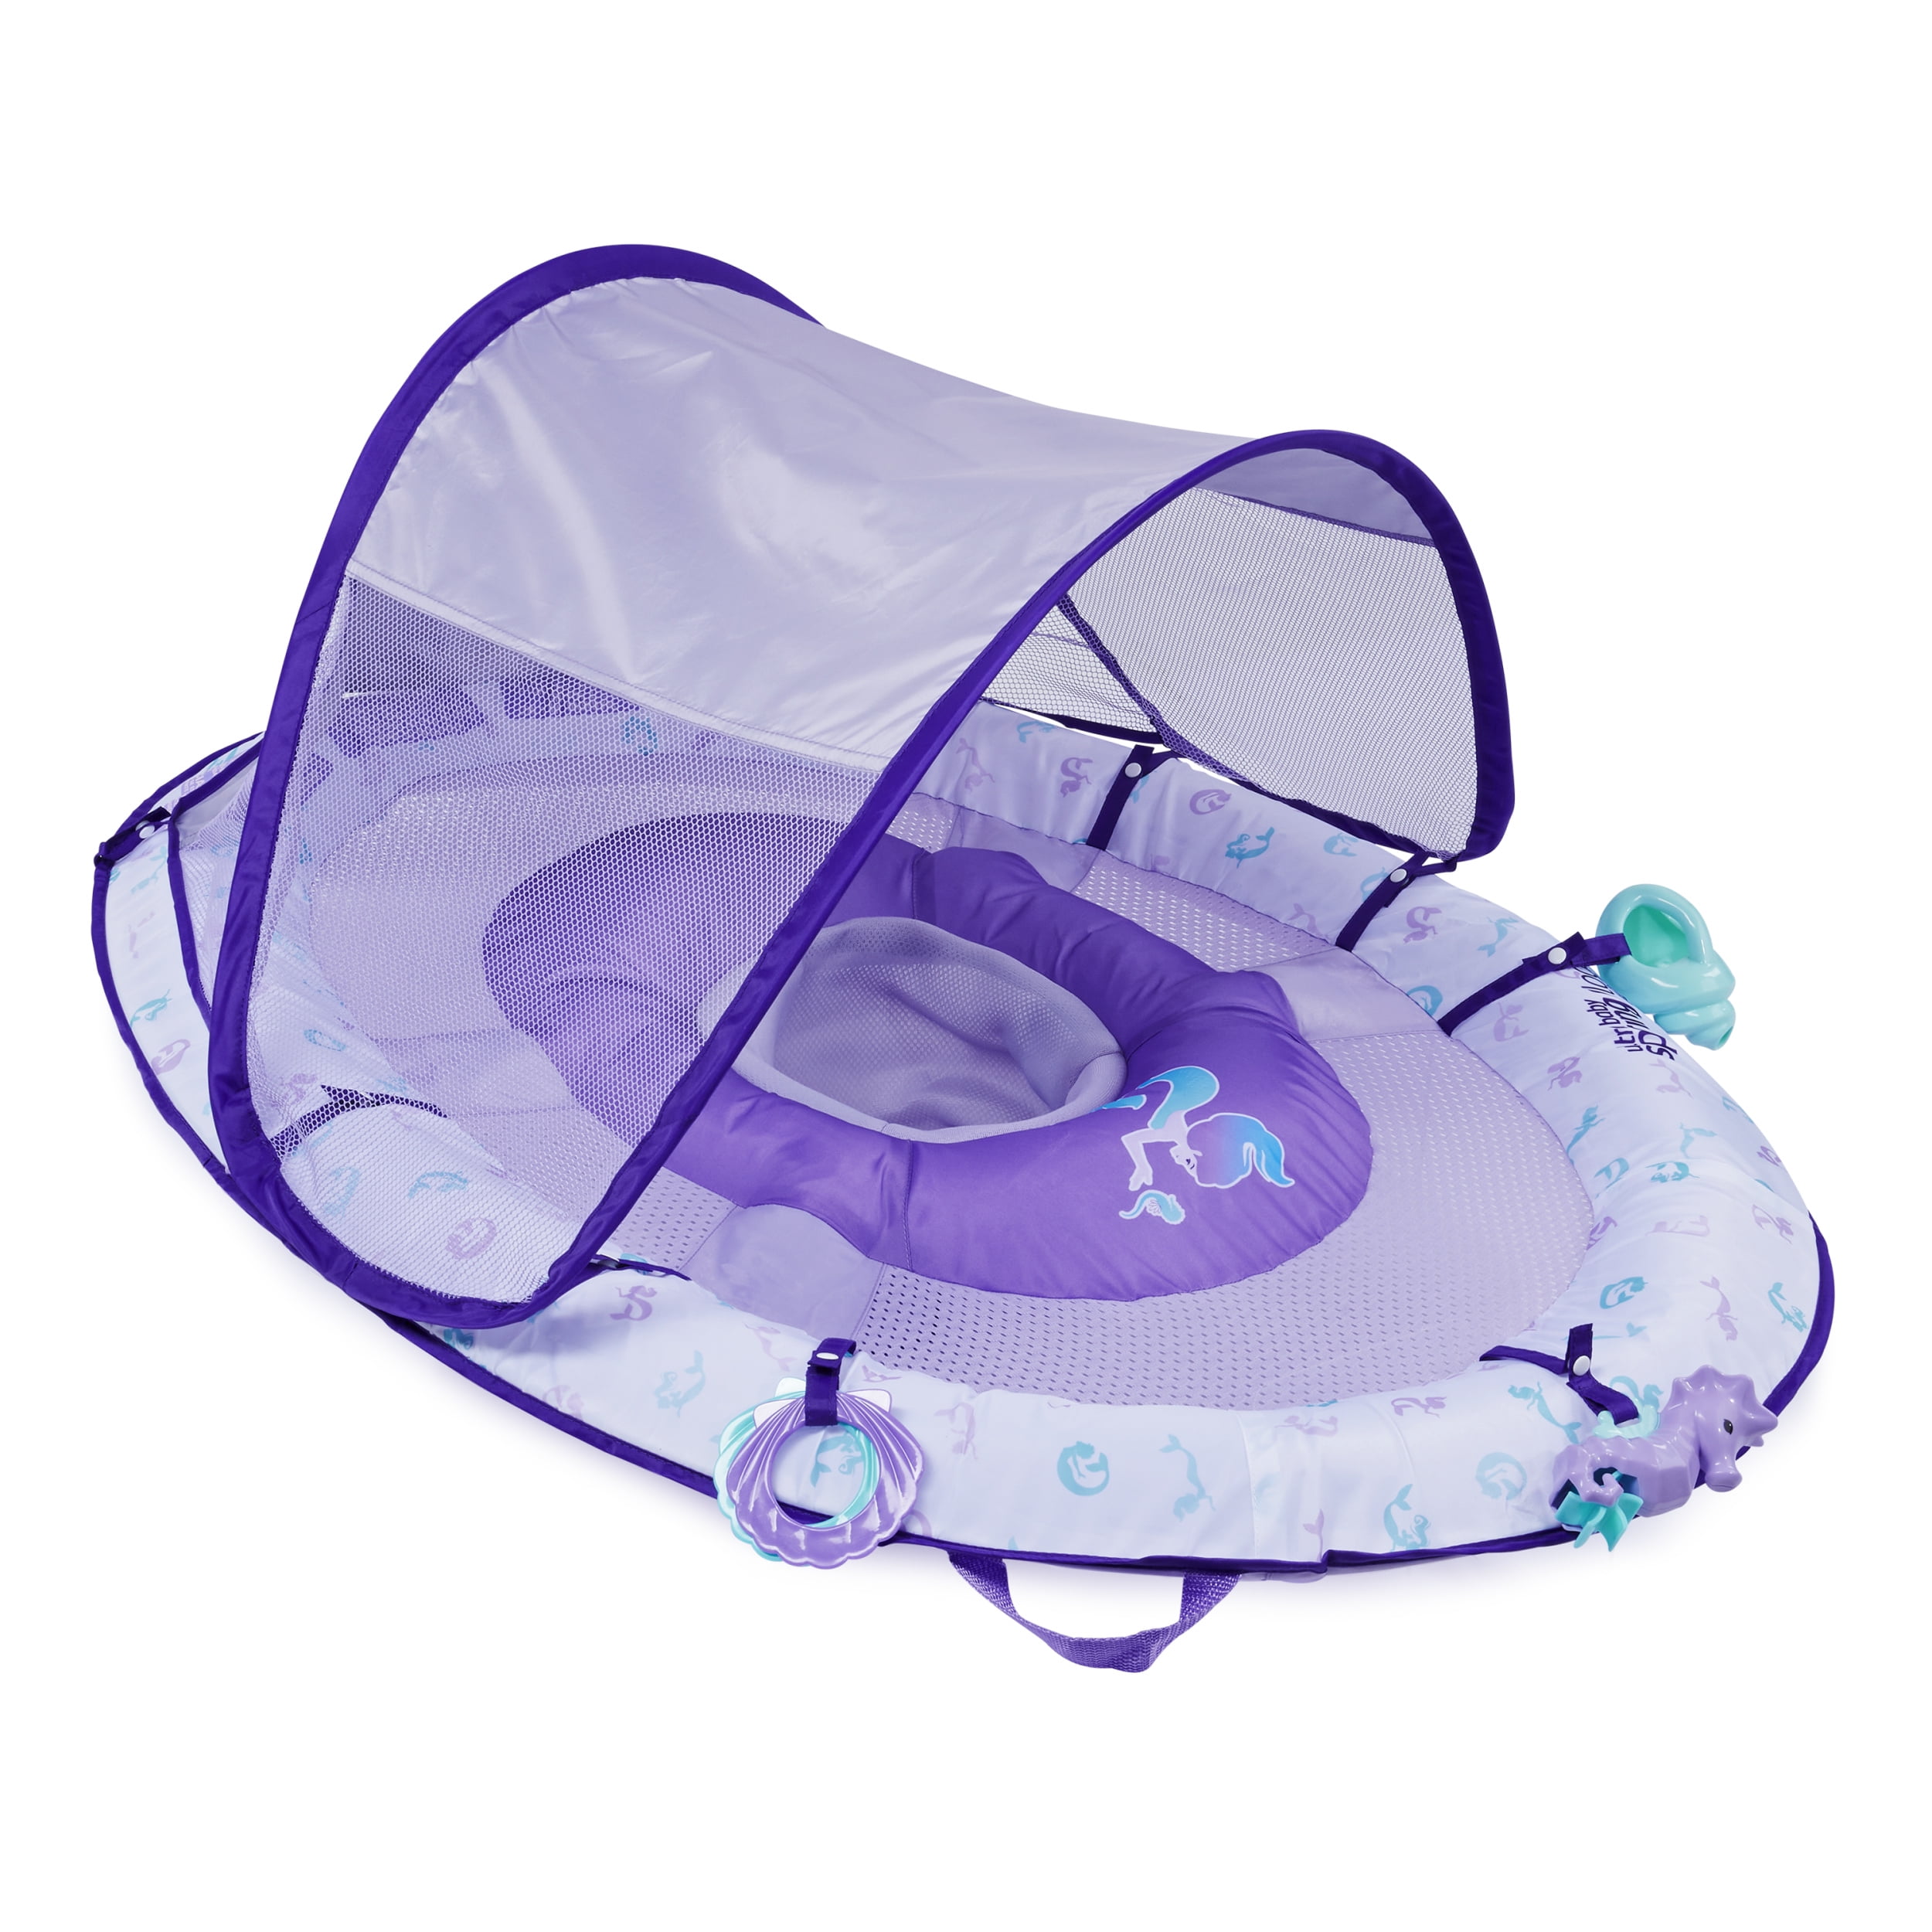 Swimways Ultra Baby Spring Float, Premium Inflatable Baby Pool